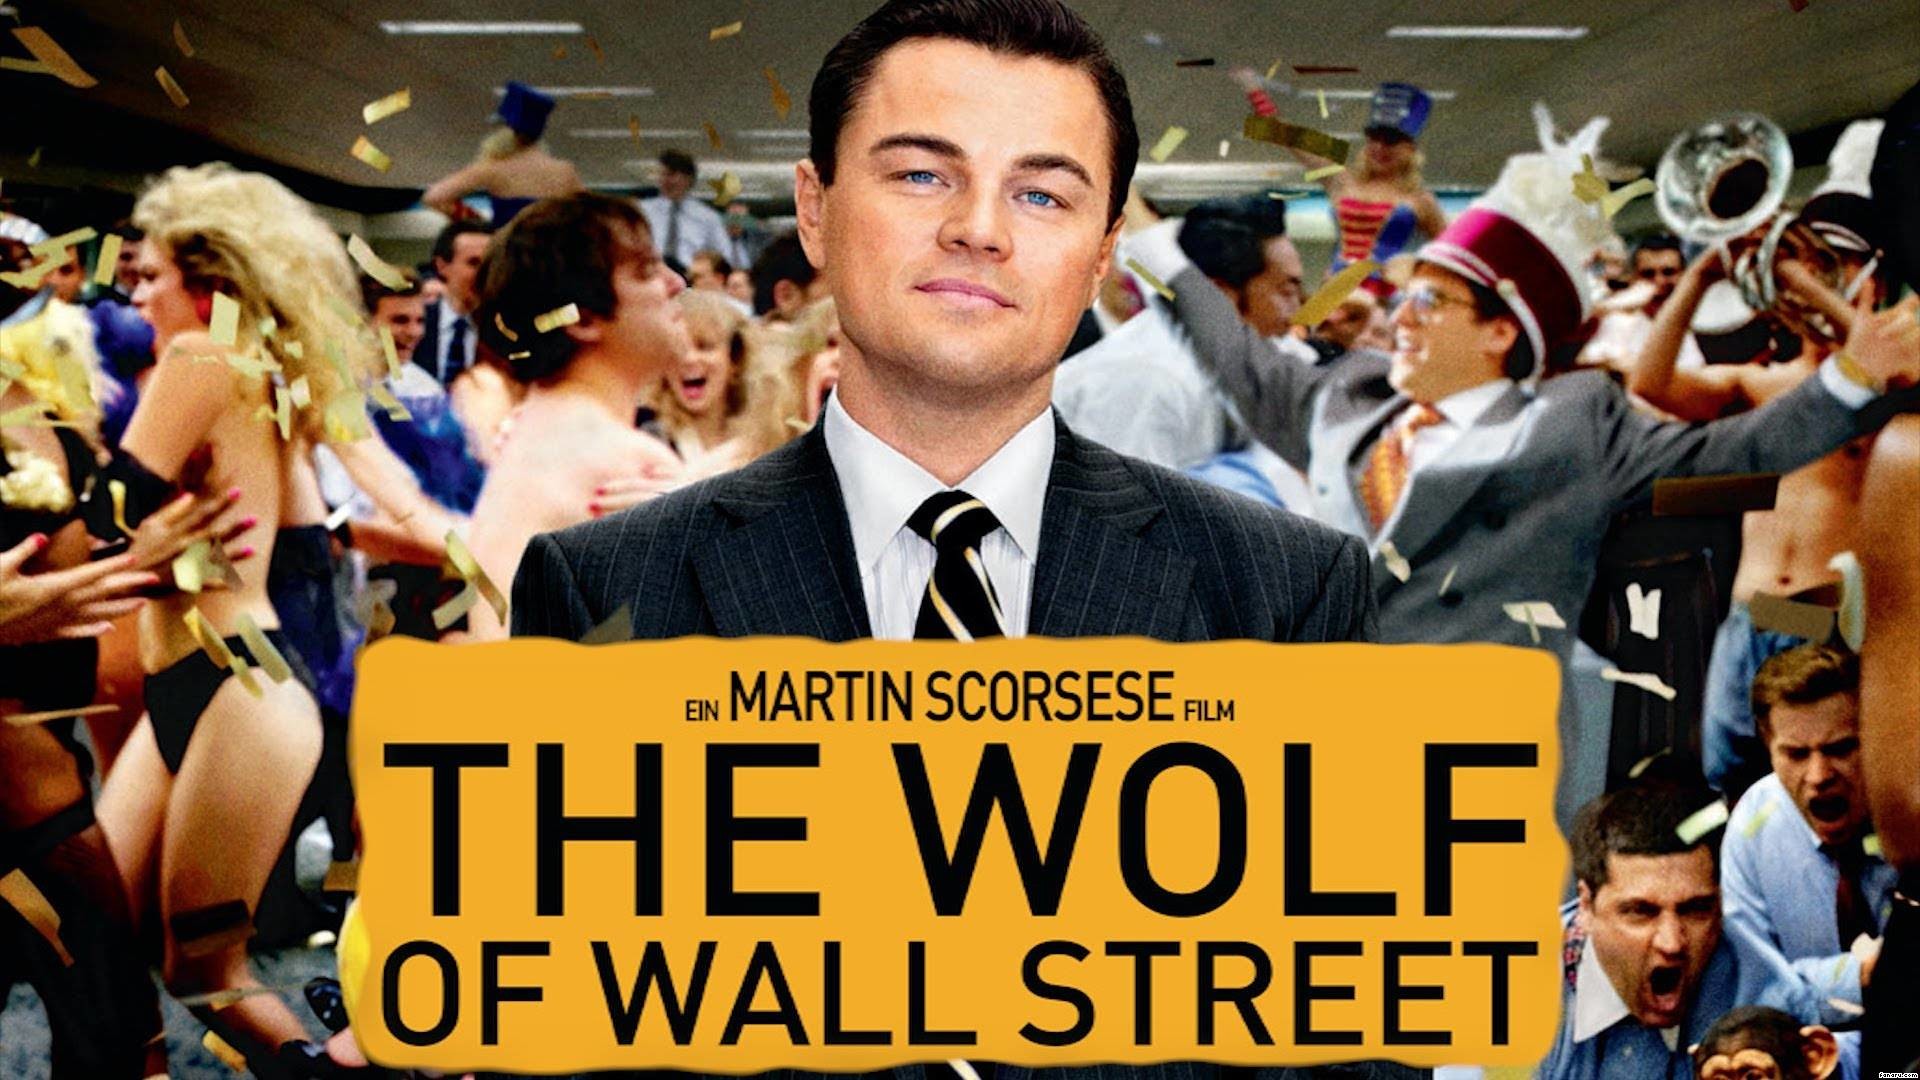 The Wolf Of Wall Street Wallpaper Wallpaper Wallpaper hd